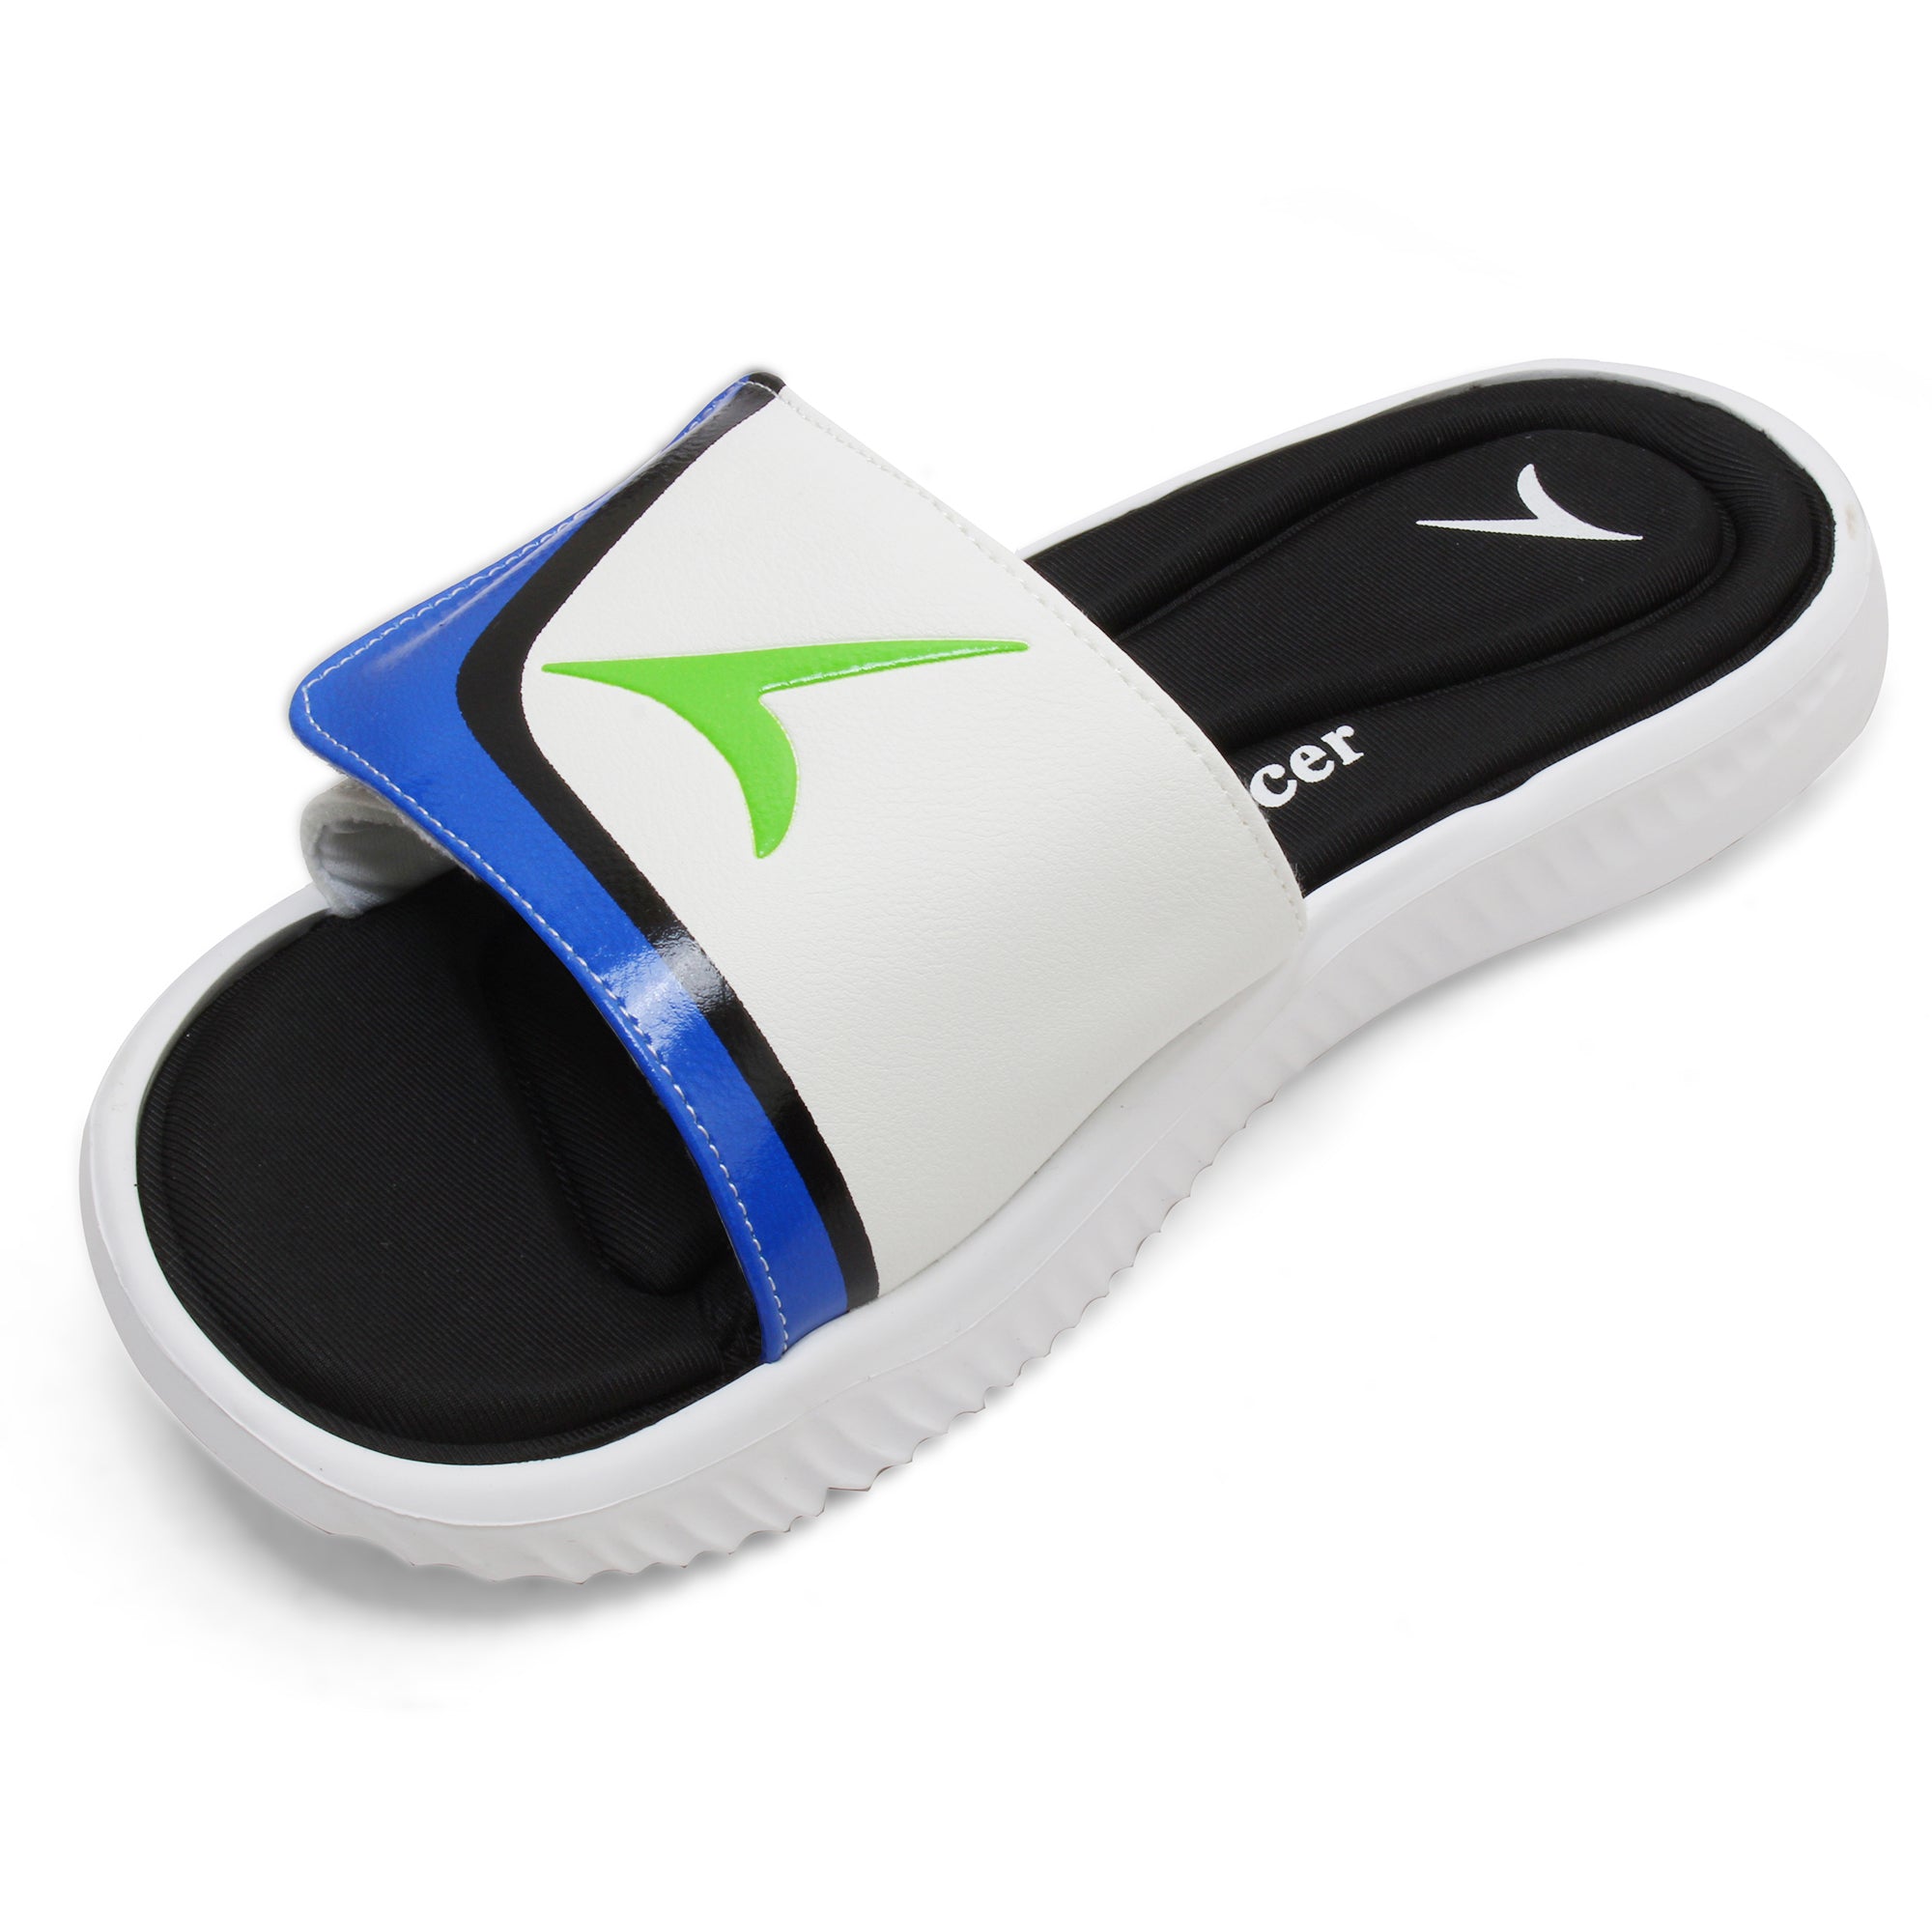 Nike Kepa Kai Men's Flip-Flops. Nike IN